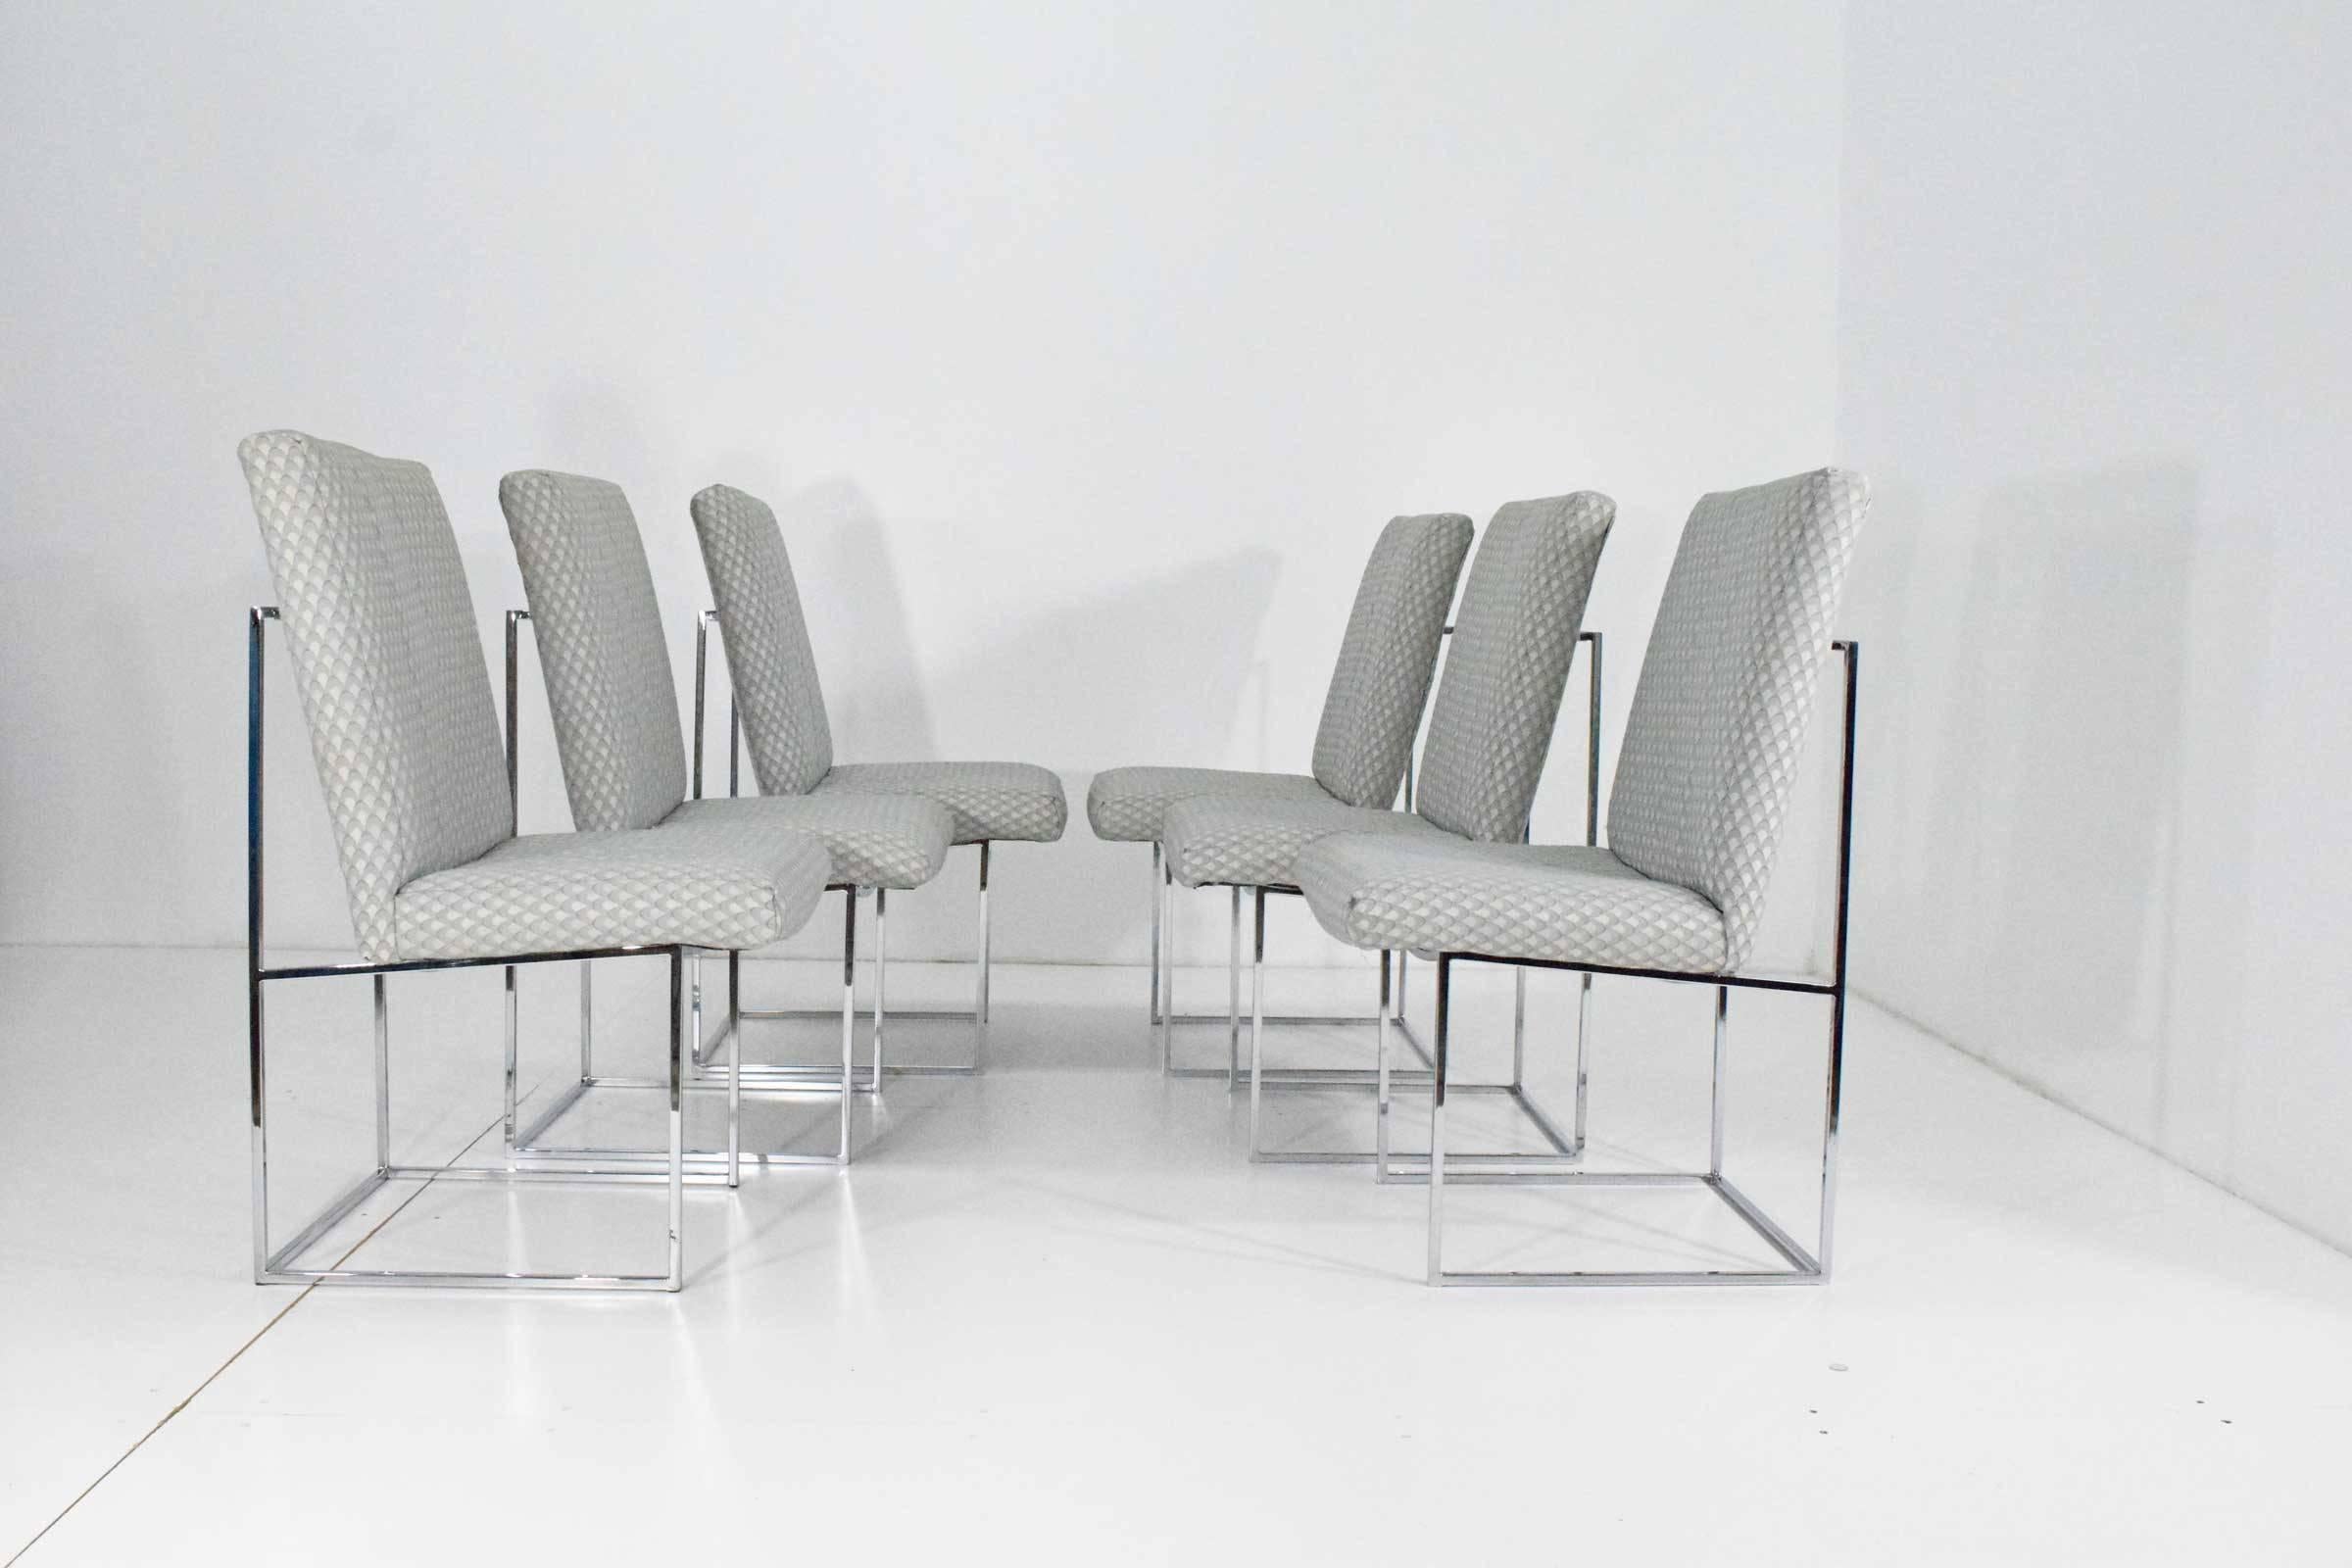 Mid-Century Modern Milo Baughman Dining Chairs